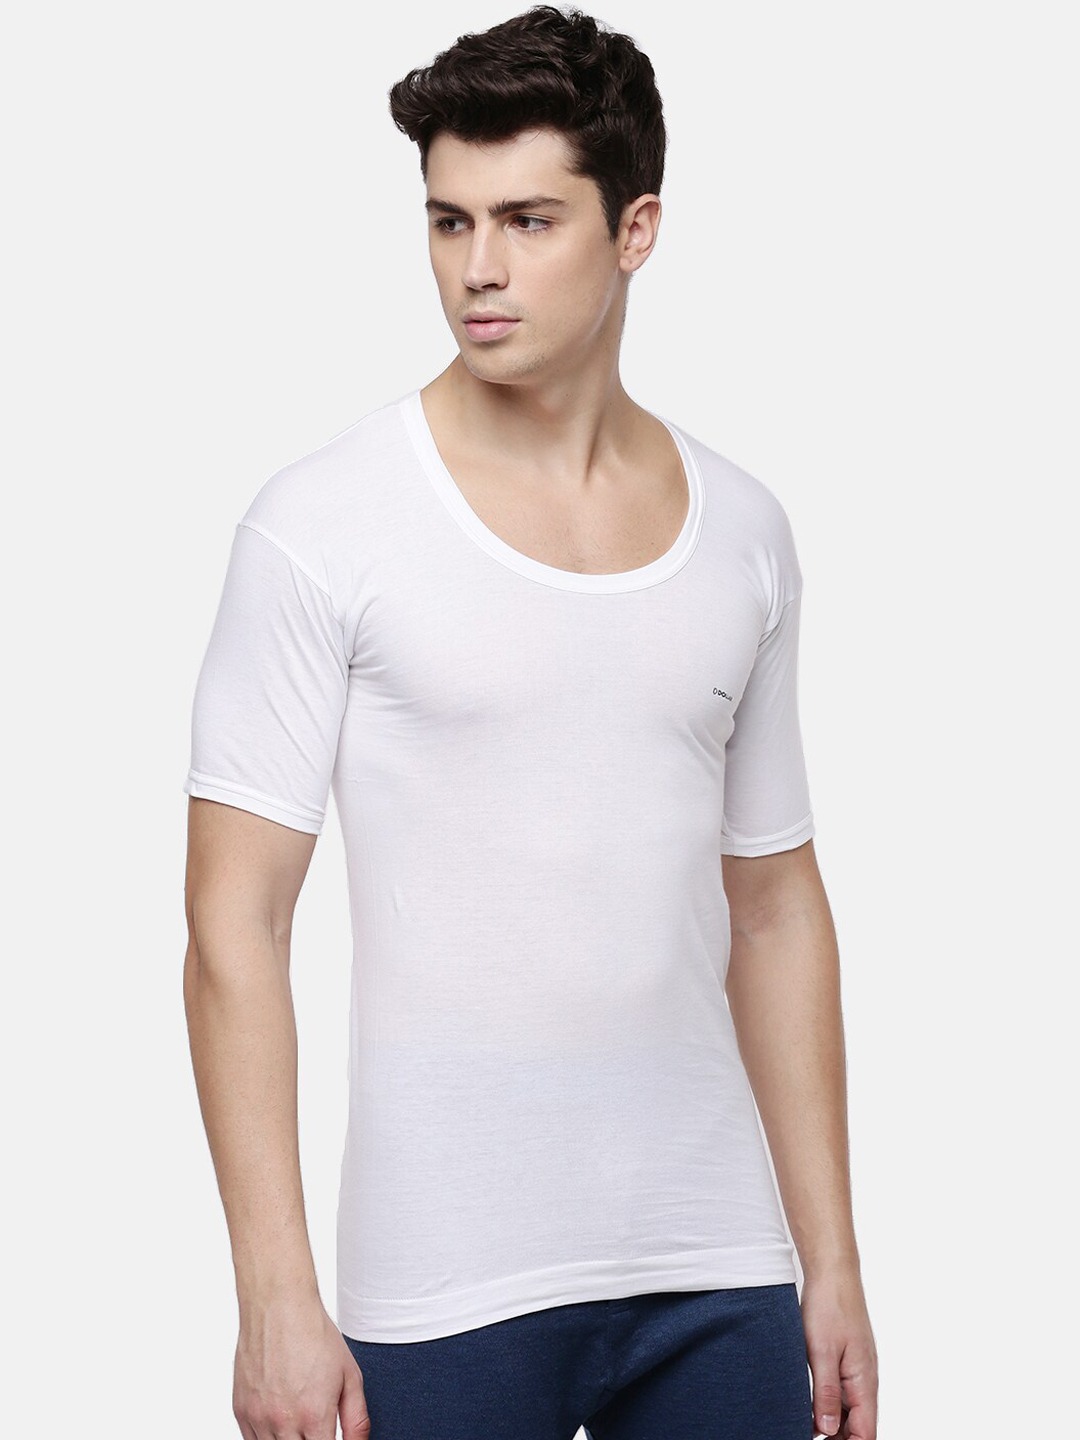 Clothing Innerwear Vests | Dollar Men Pack Of 7 White Solid Innerwear Vests MLHVE-02-PO7 - IB96688